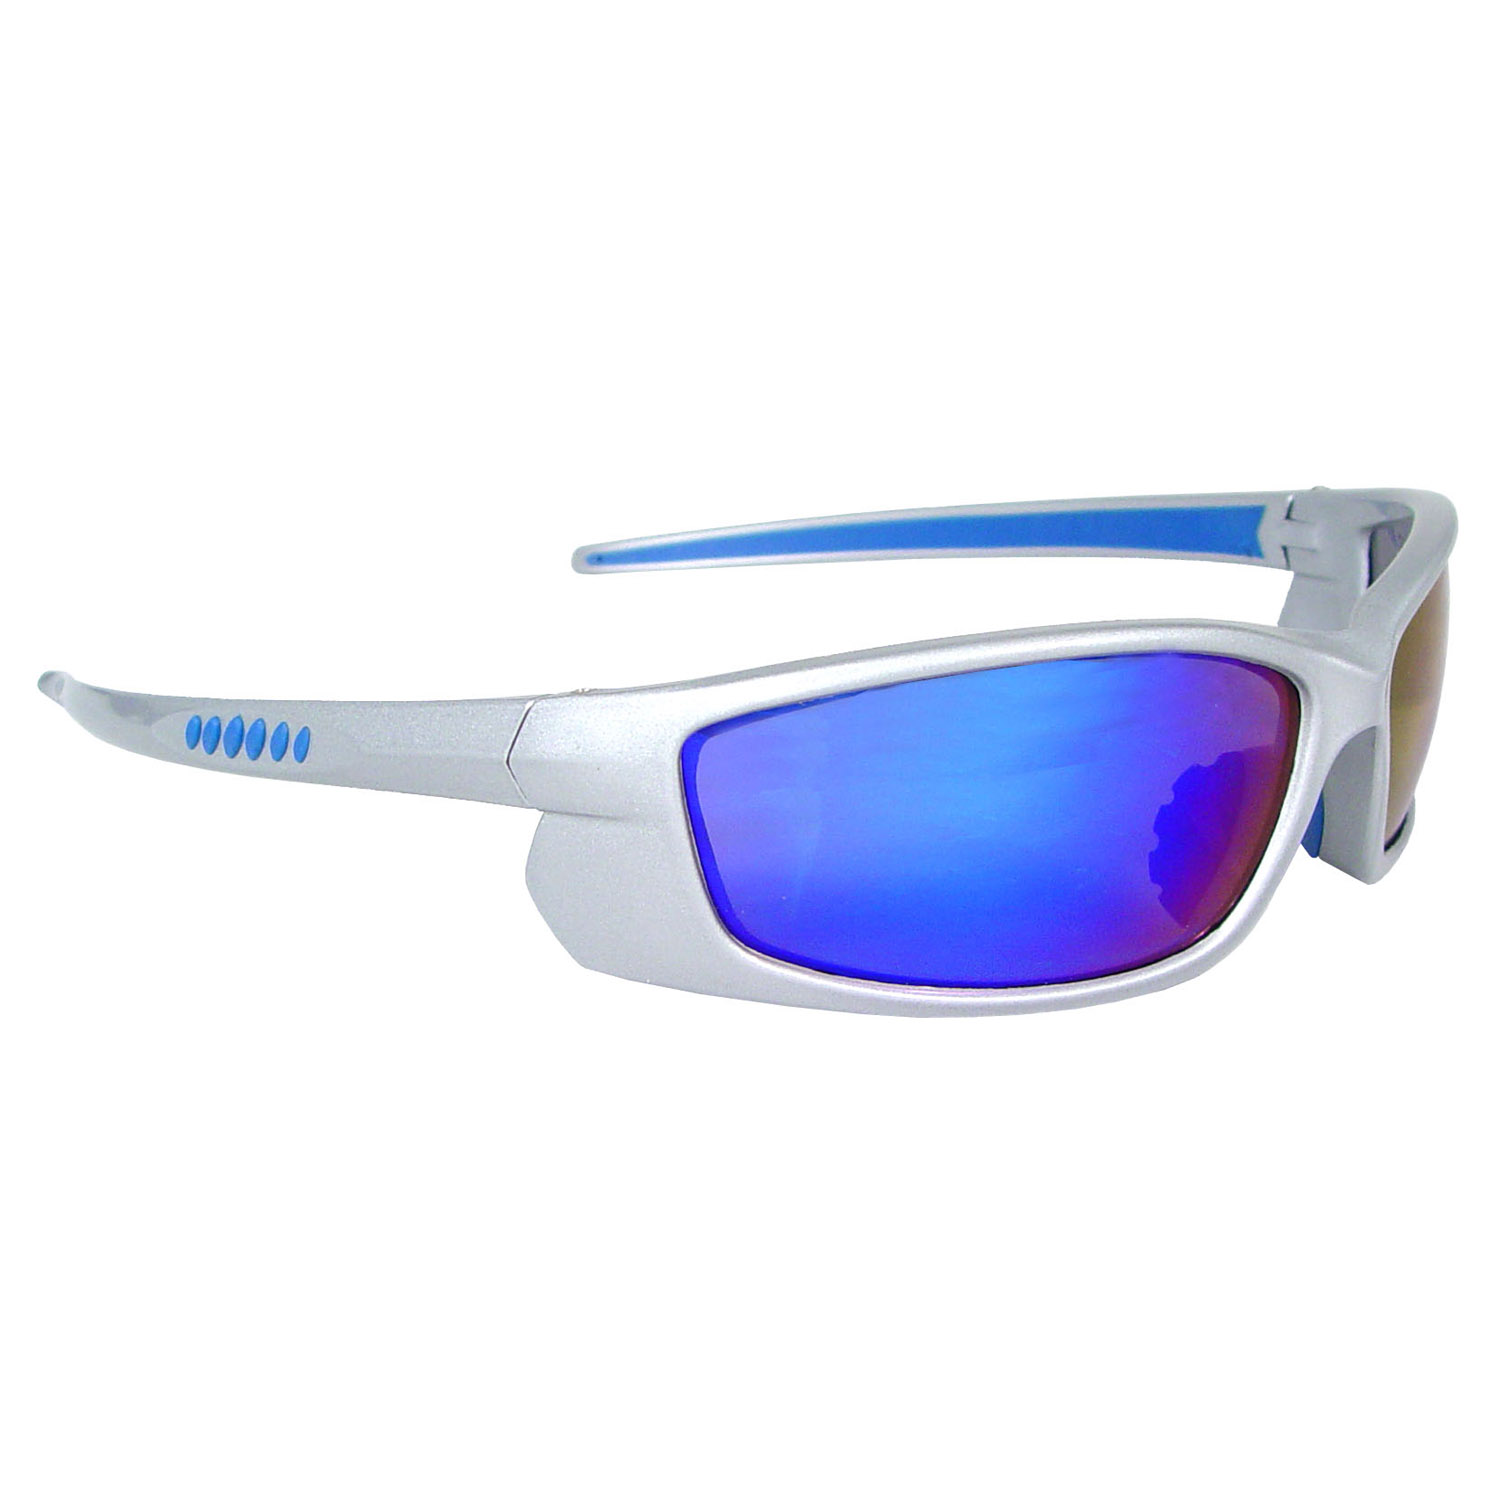 Voltage™ Safety Eyewear - Silver Frame - Electric Blue Lens - Tinted Lens